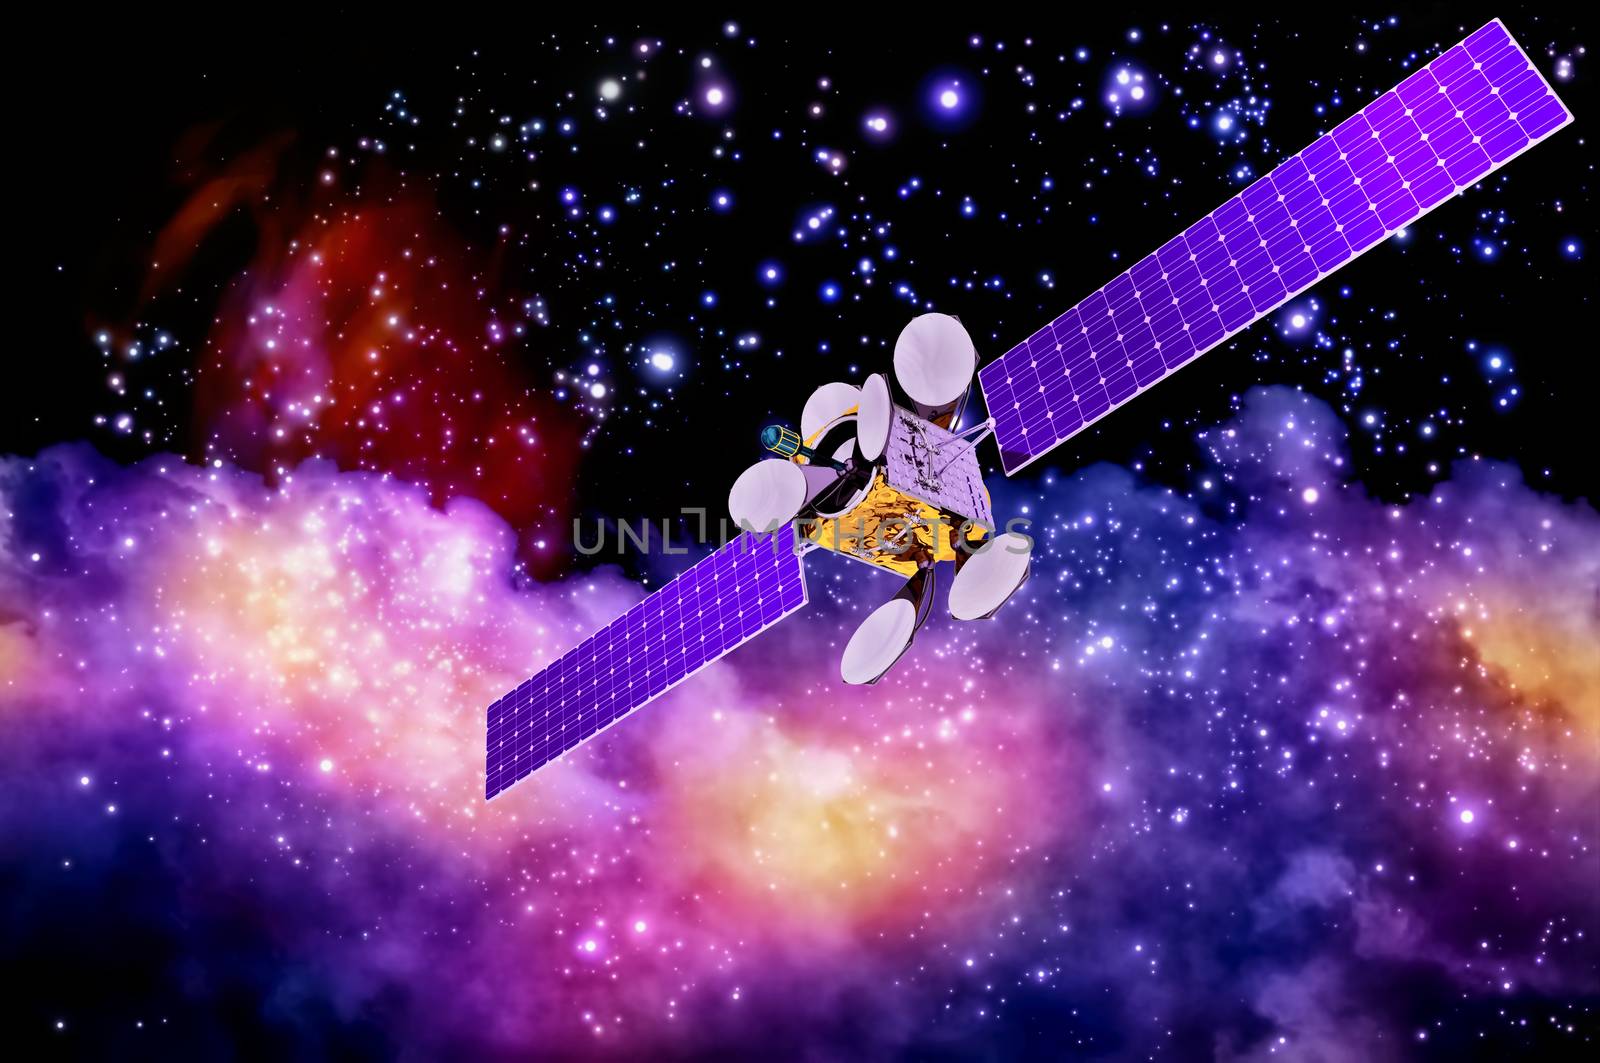 artificial satellite against nebula's background by merzavka